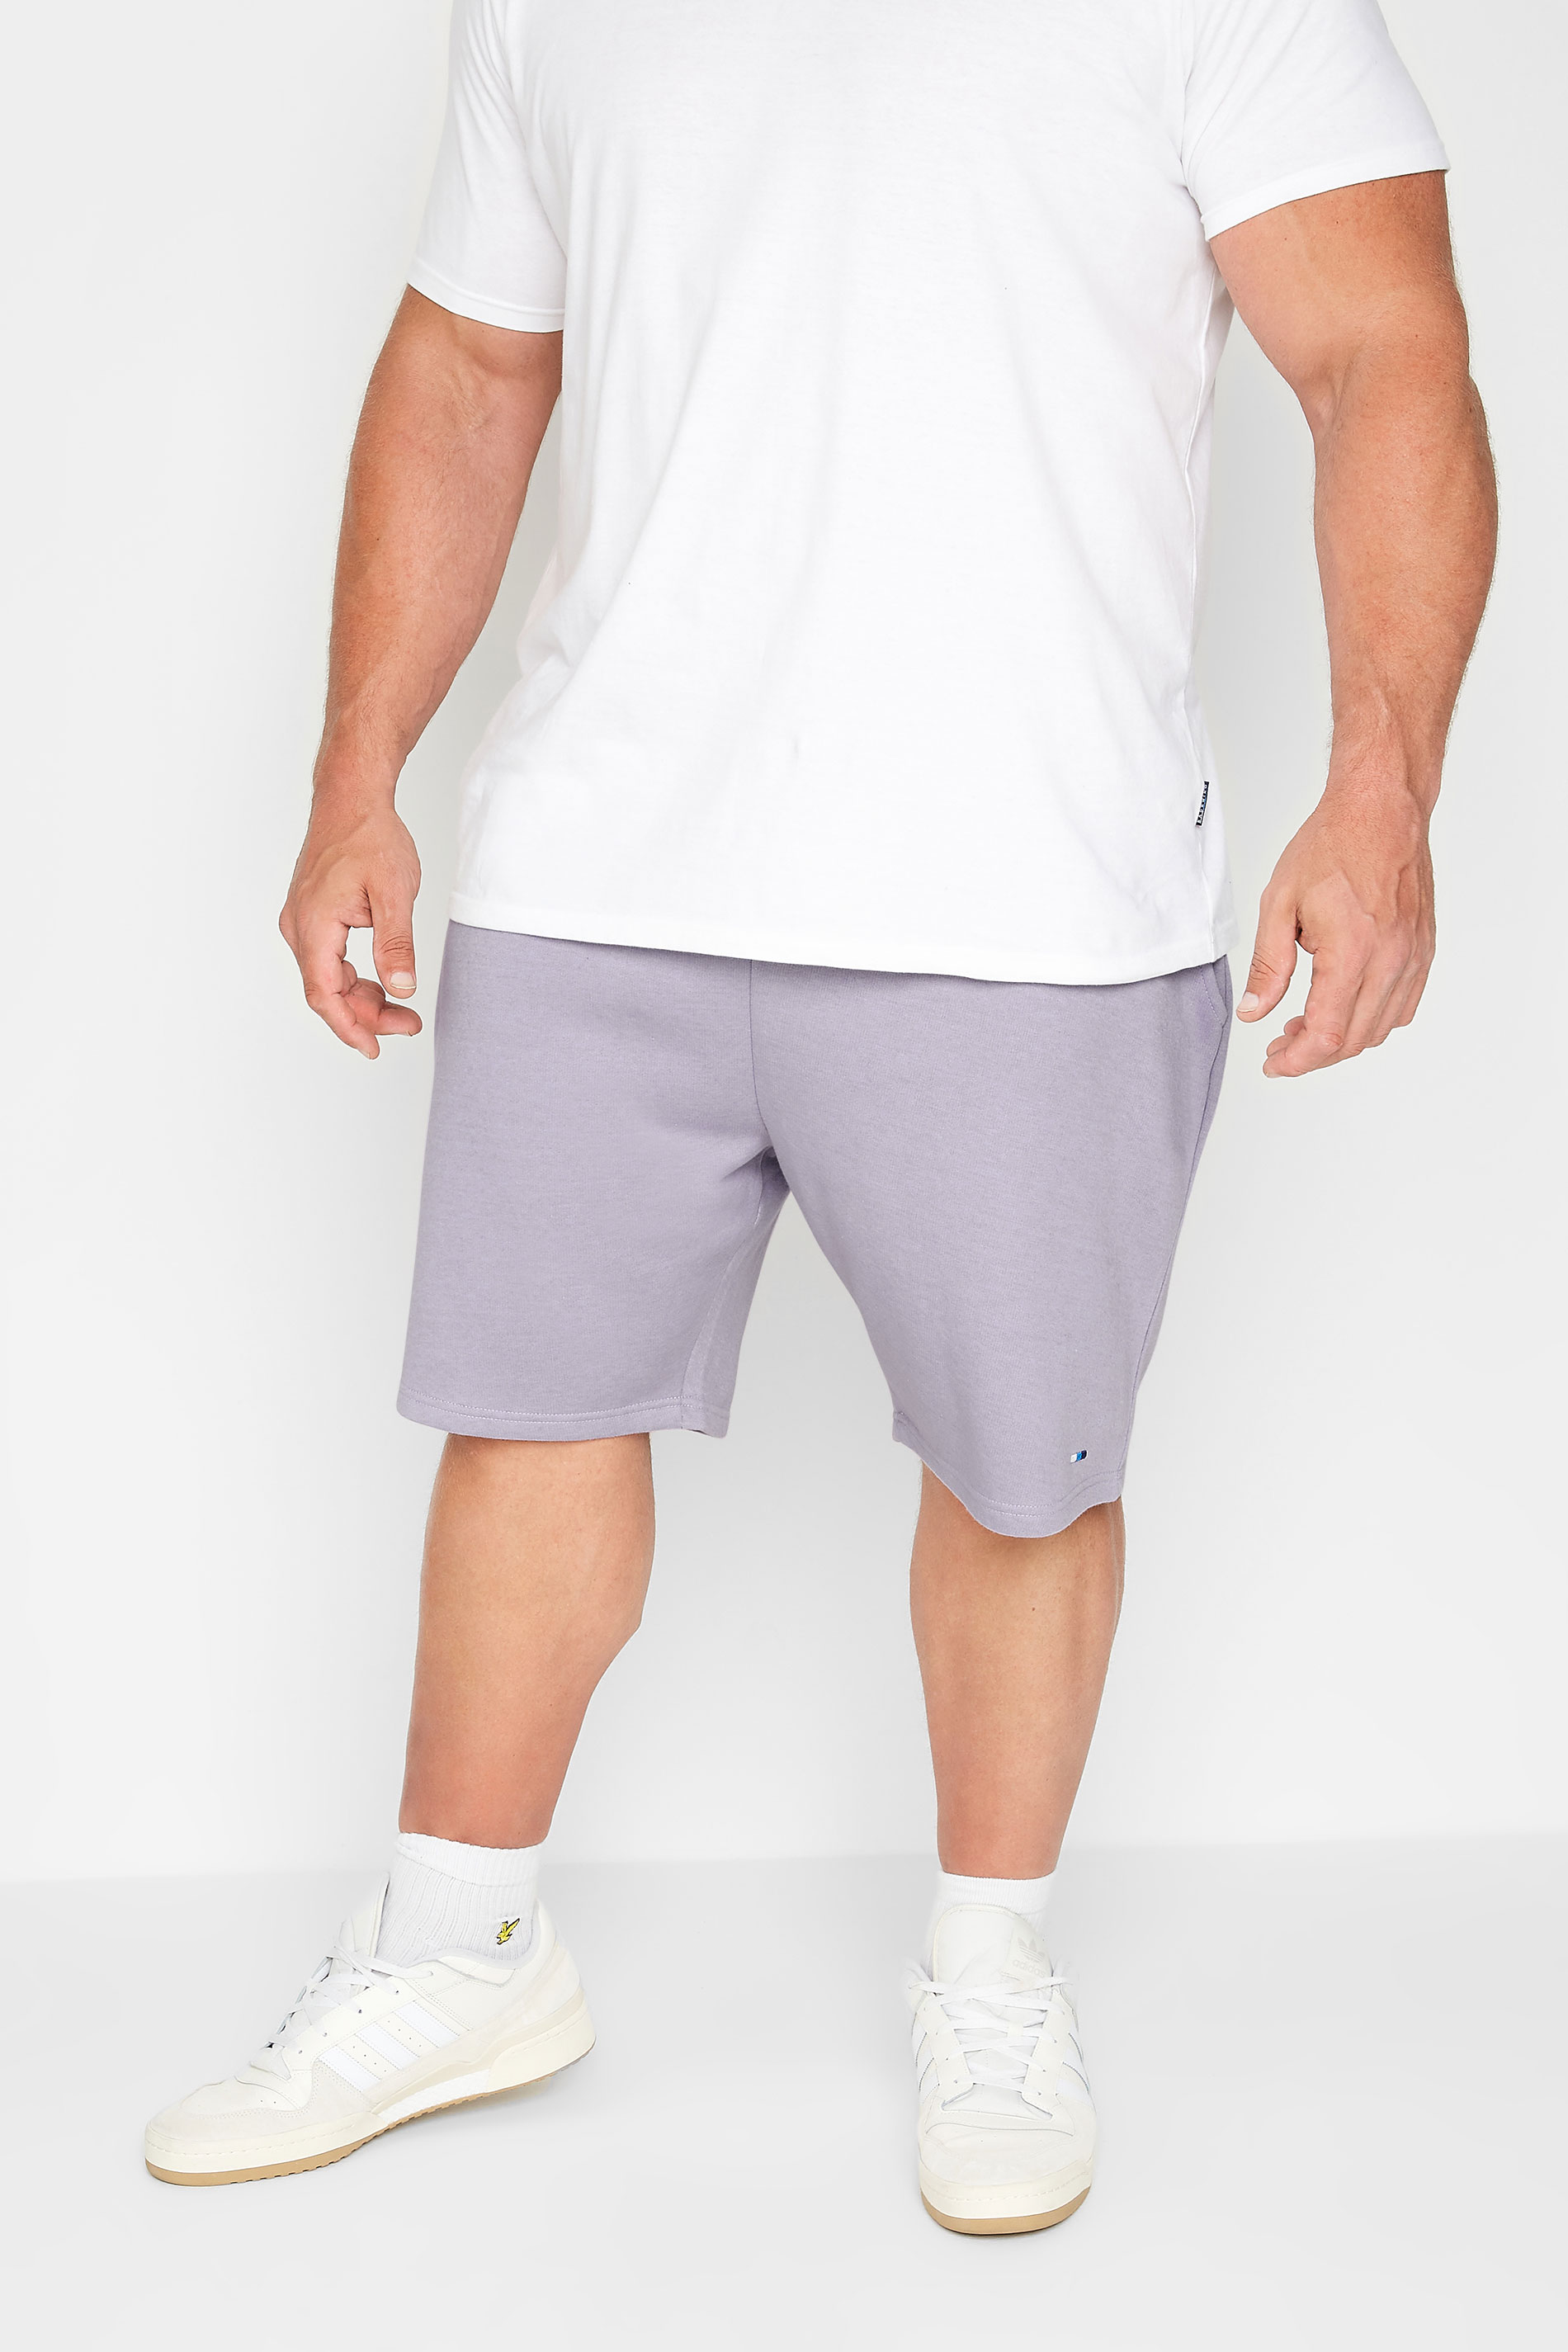 BadRhino Big & Tall Plus Size Lilac Purple Jogger Shorts | BadRhino  1